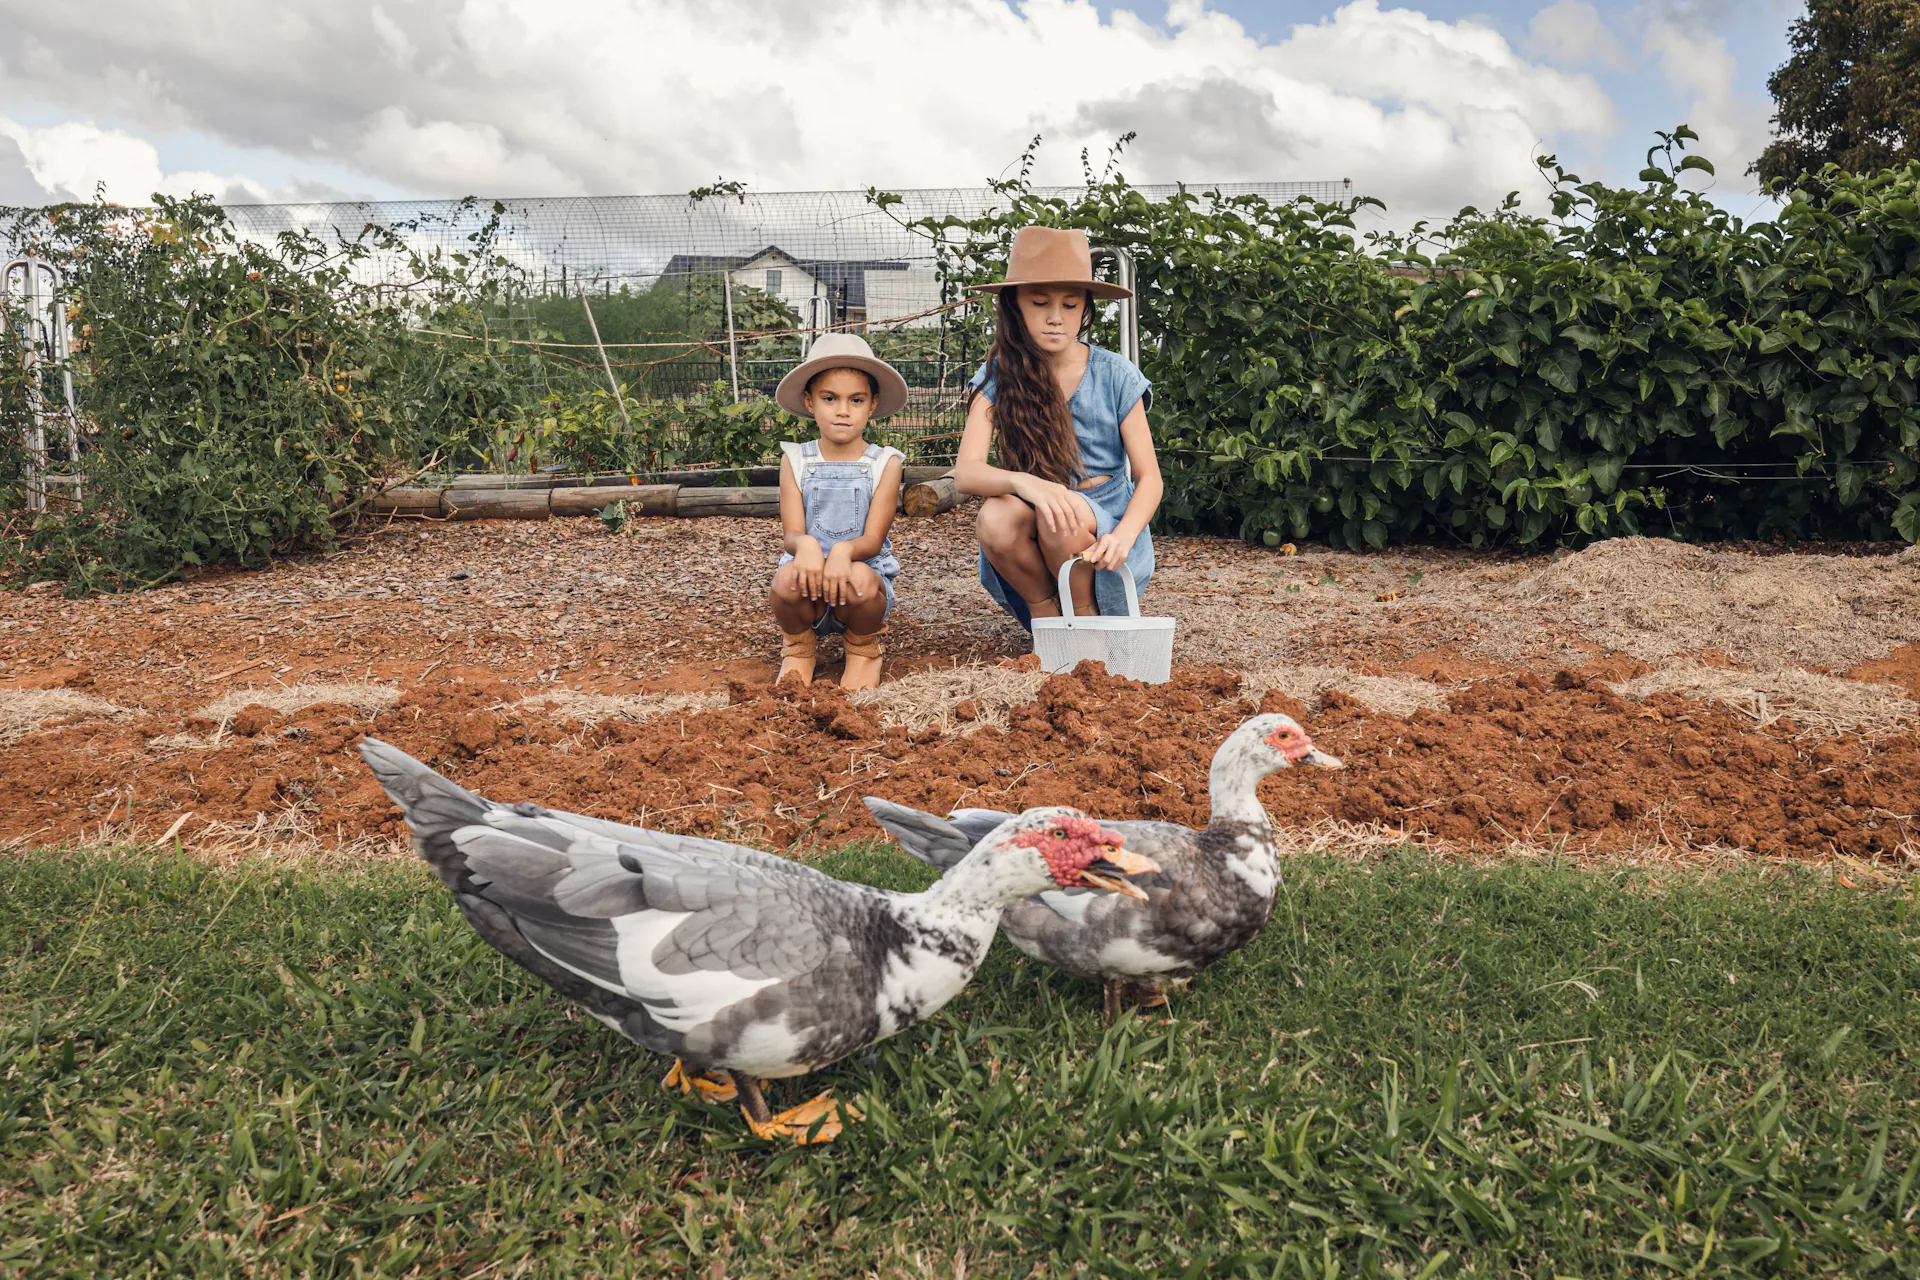 Children sitting in front of veggie patch feeding the ducks